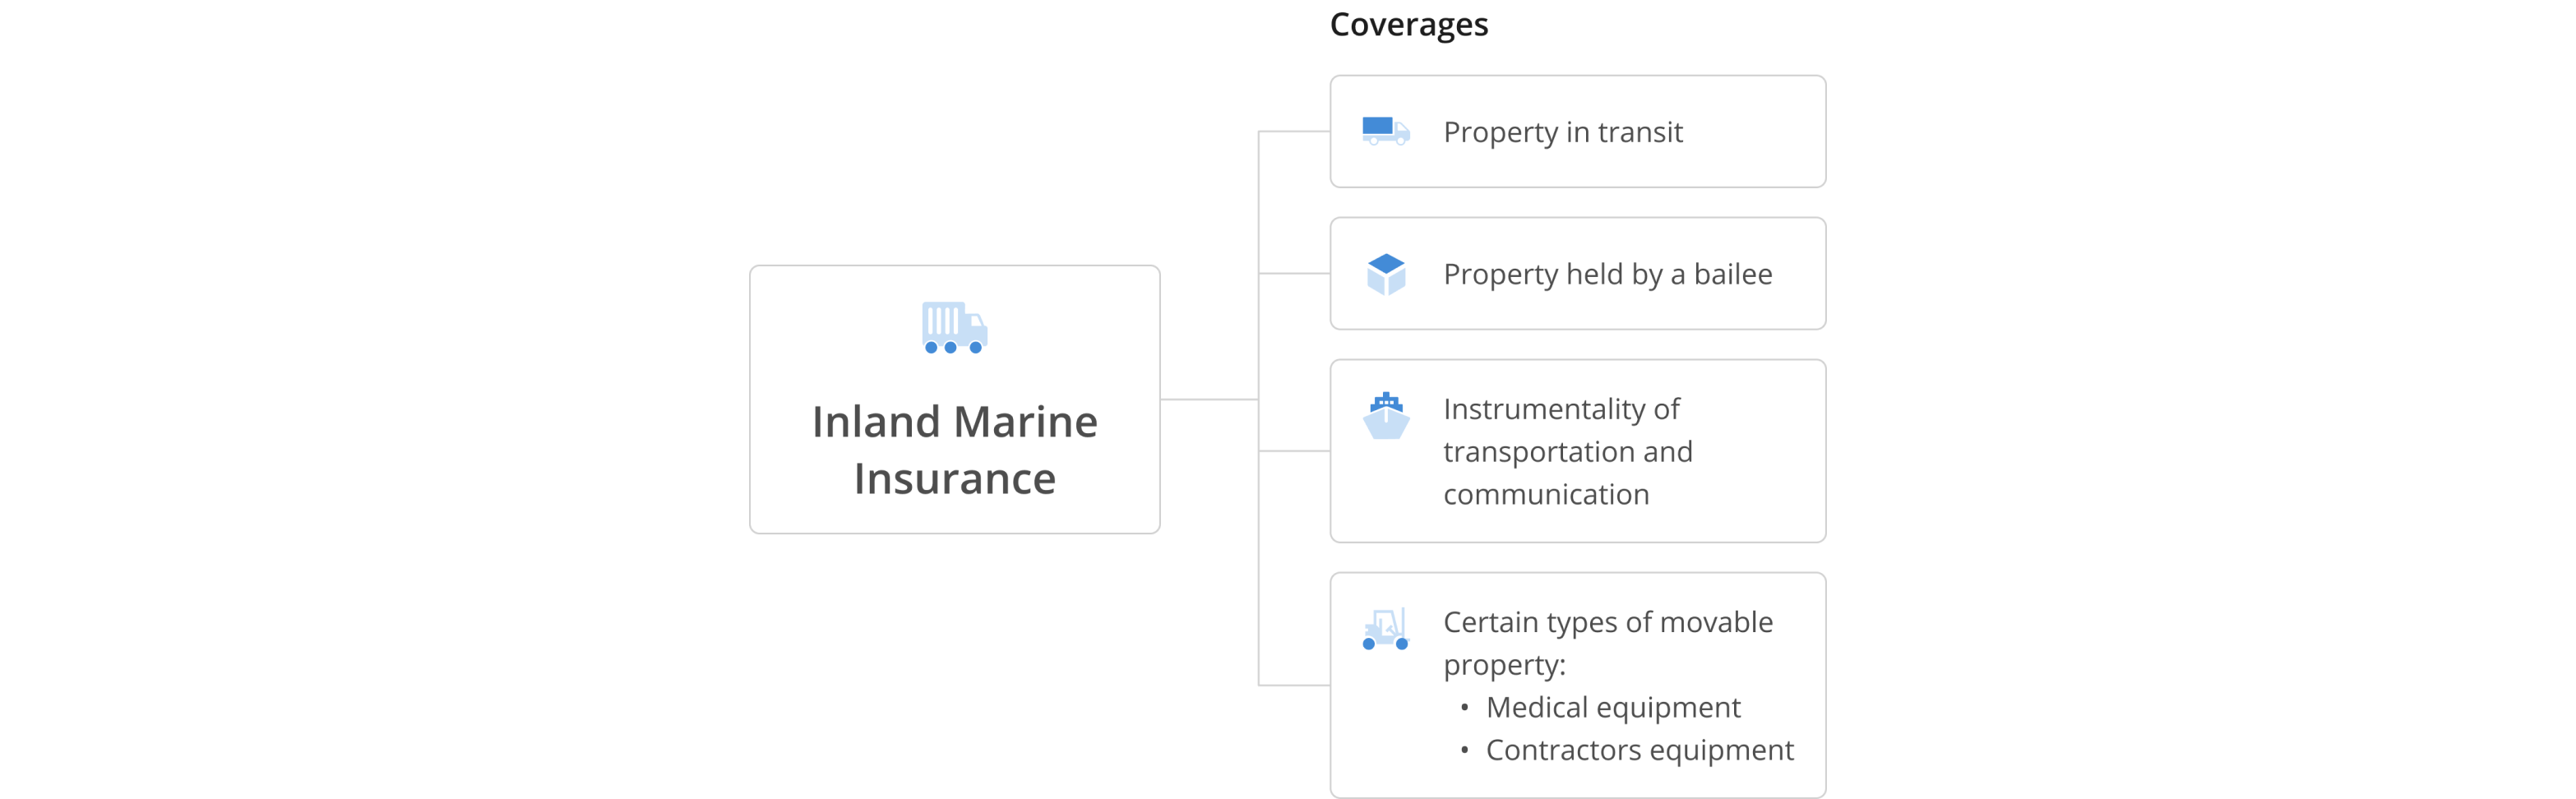 NEW - DESKTOP - Infographic - Inland Marine Insurance@2x